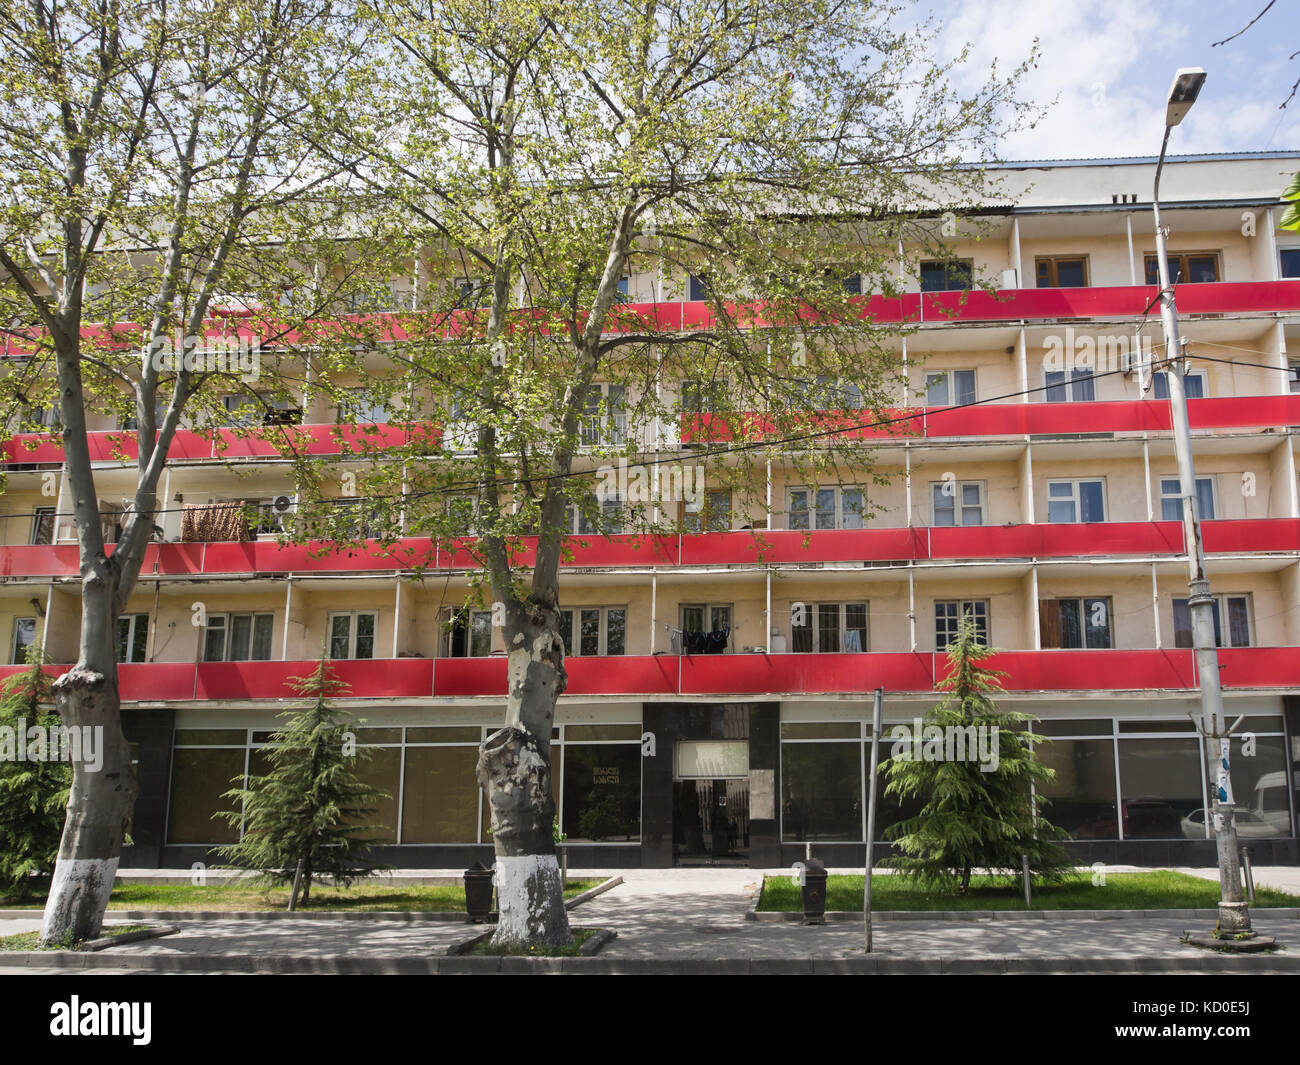 Apartment block in Gori Georgia from Soviet time, building in Khrushchyovka style Stock Photo